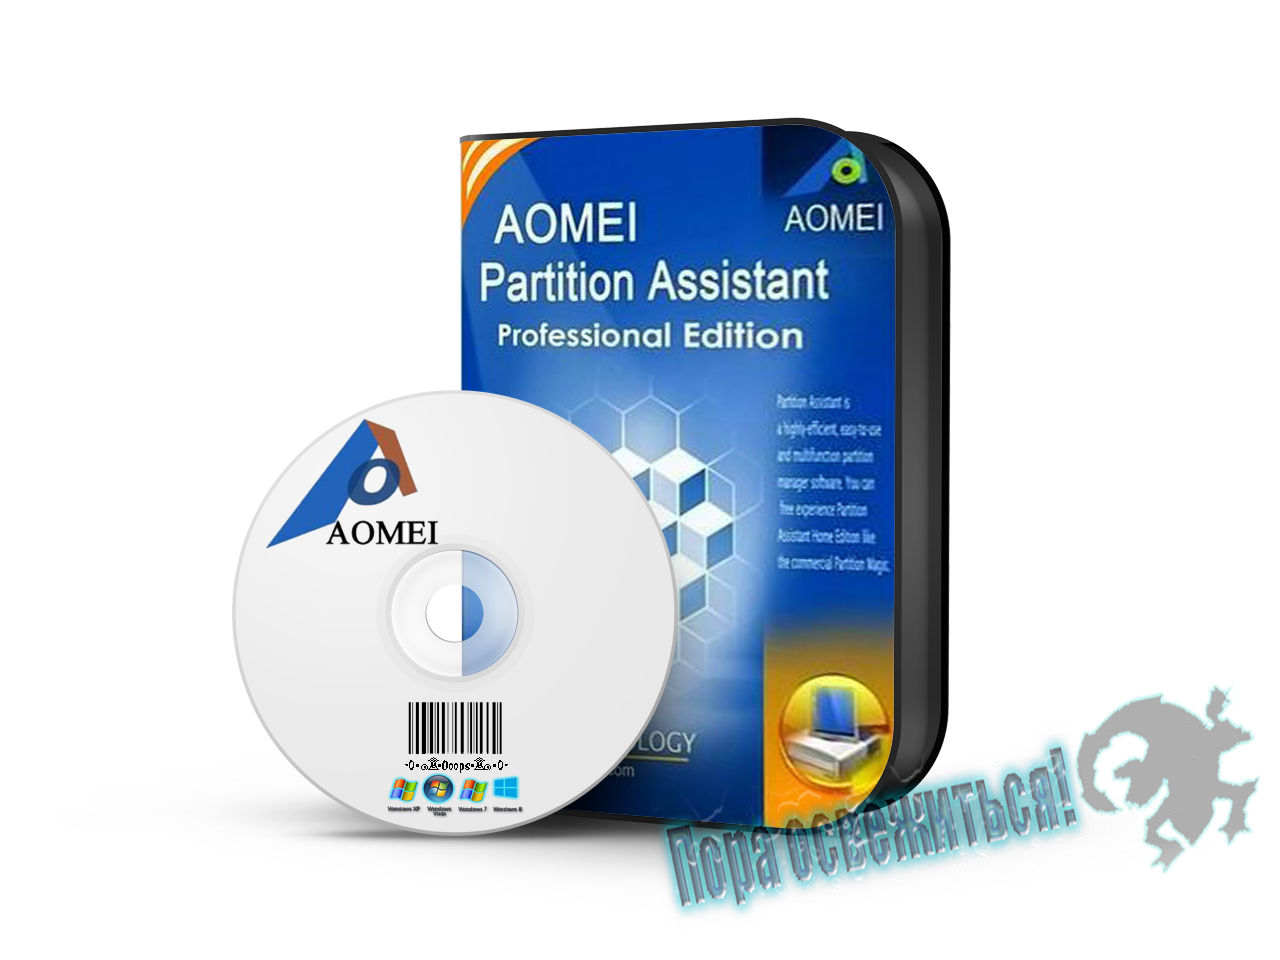 aomei partition assistant pro edition 5.2 crack